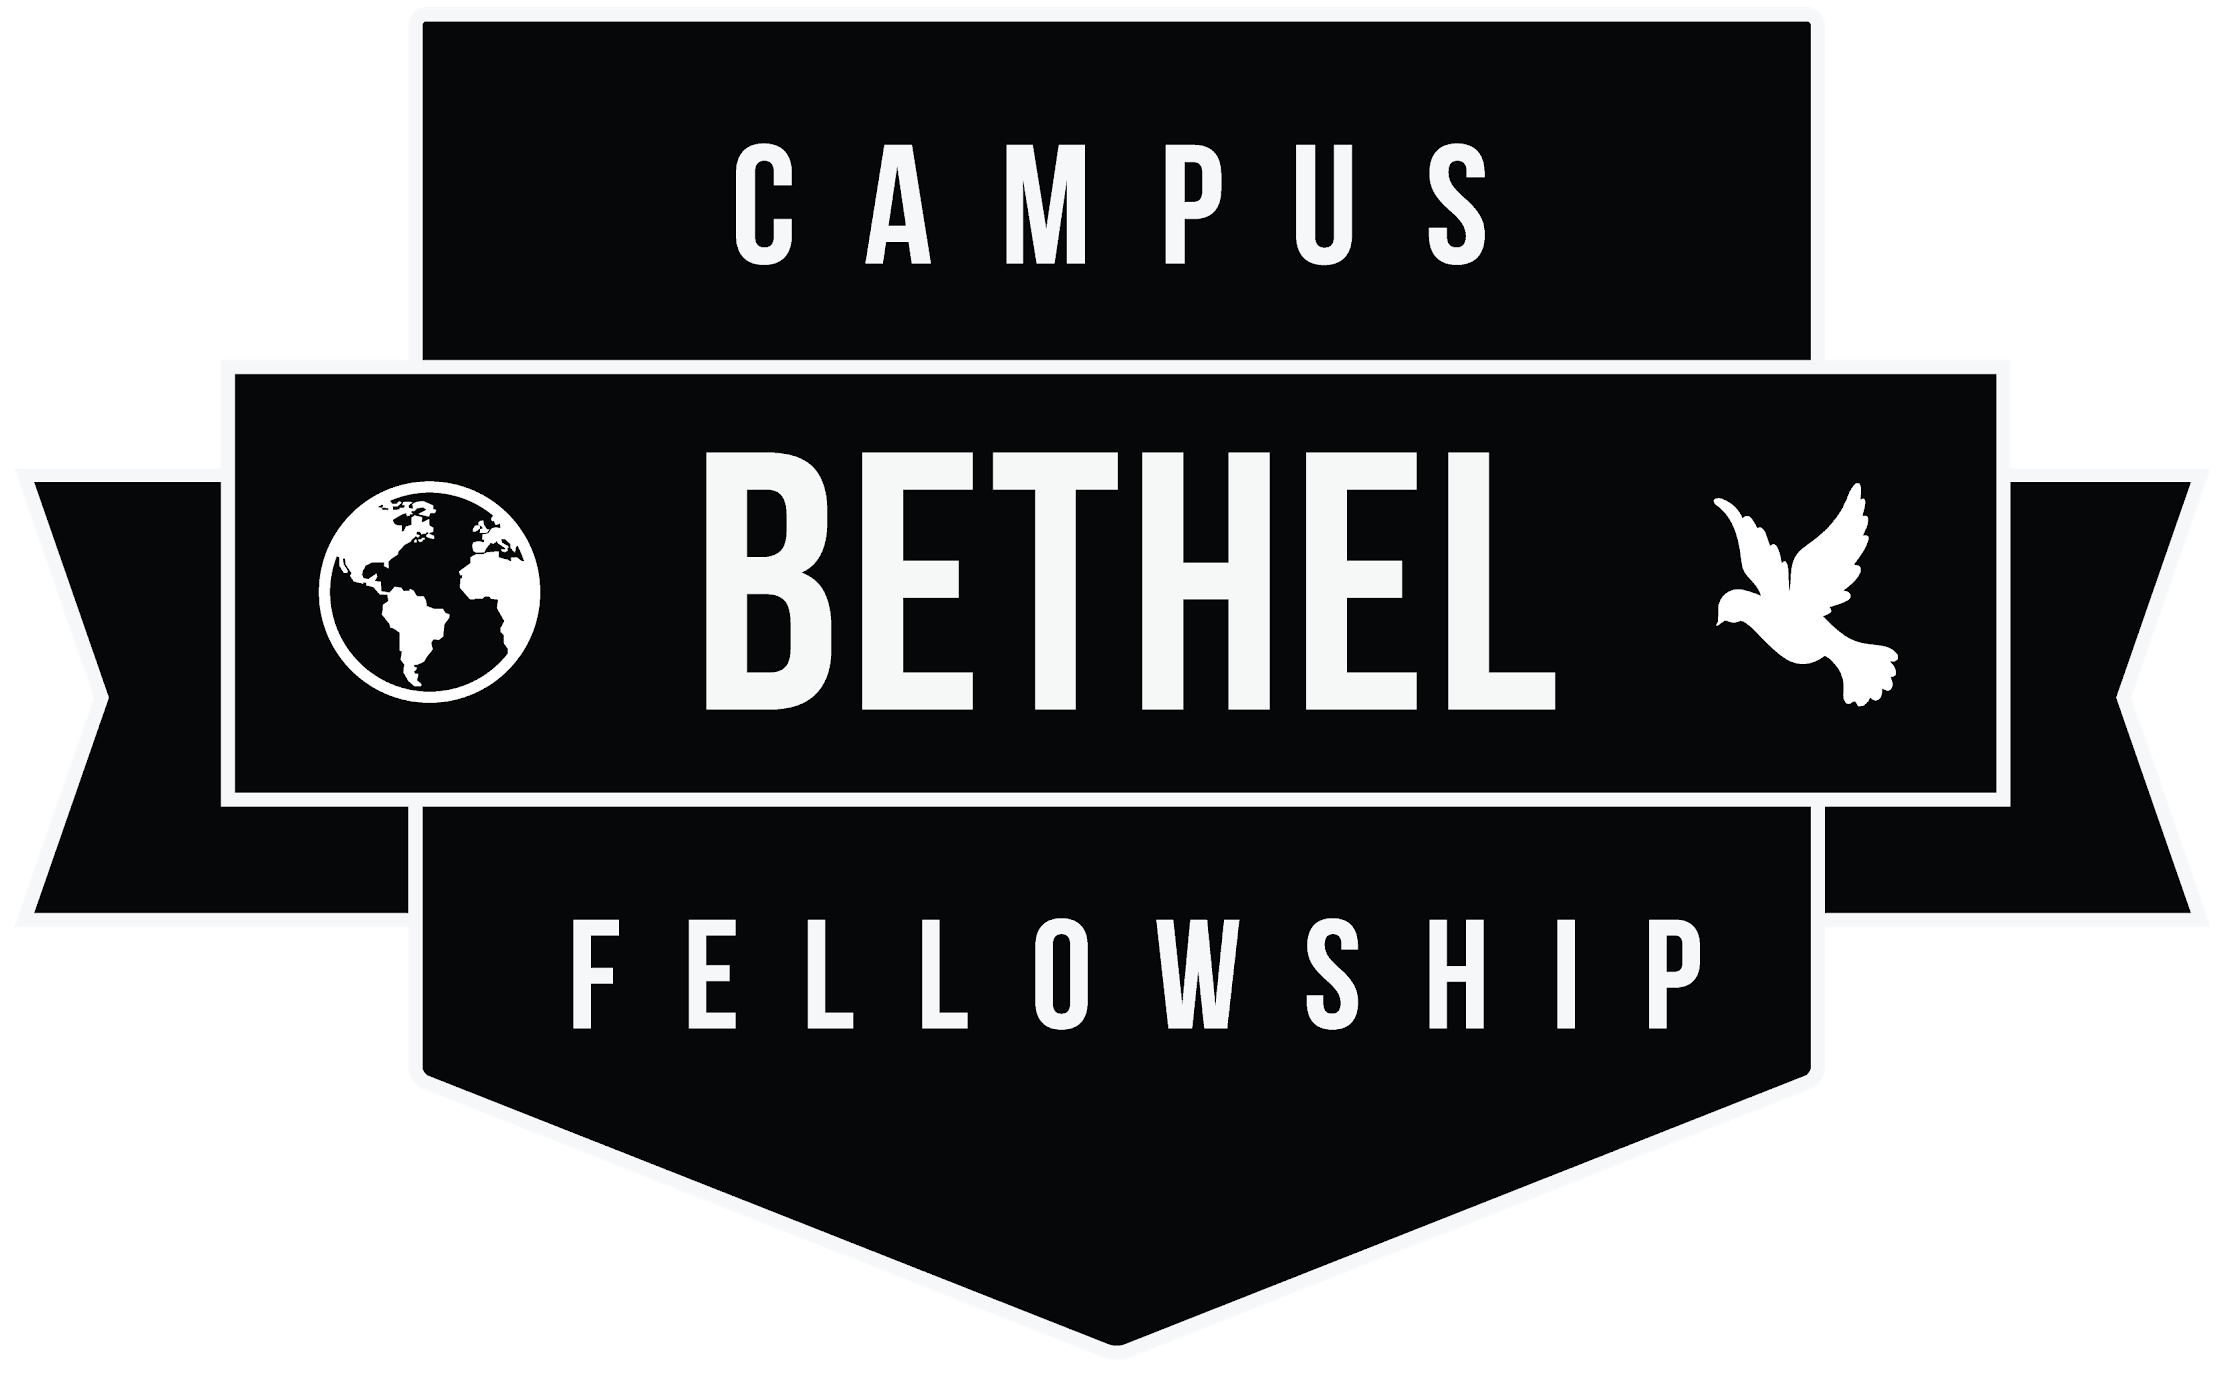 Bethel Campus Fellowship